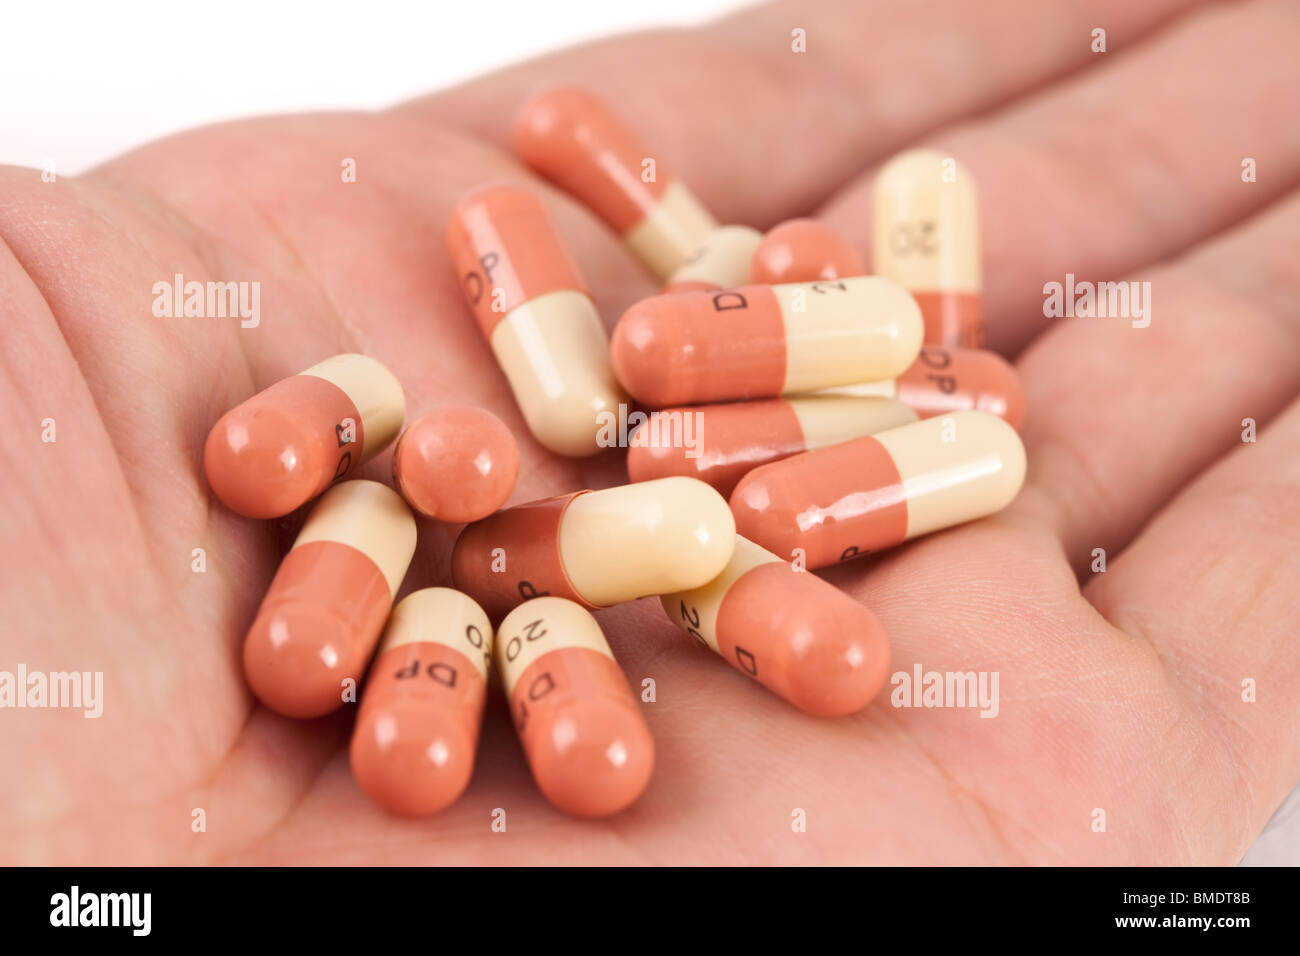 antibiotic capsules in a hand Stock Photo